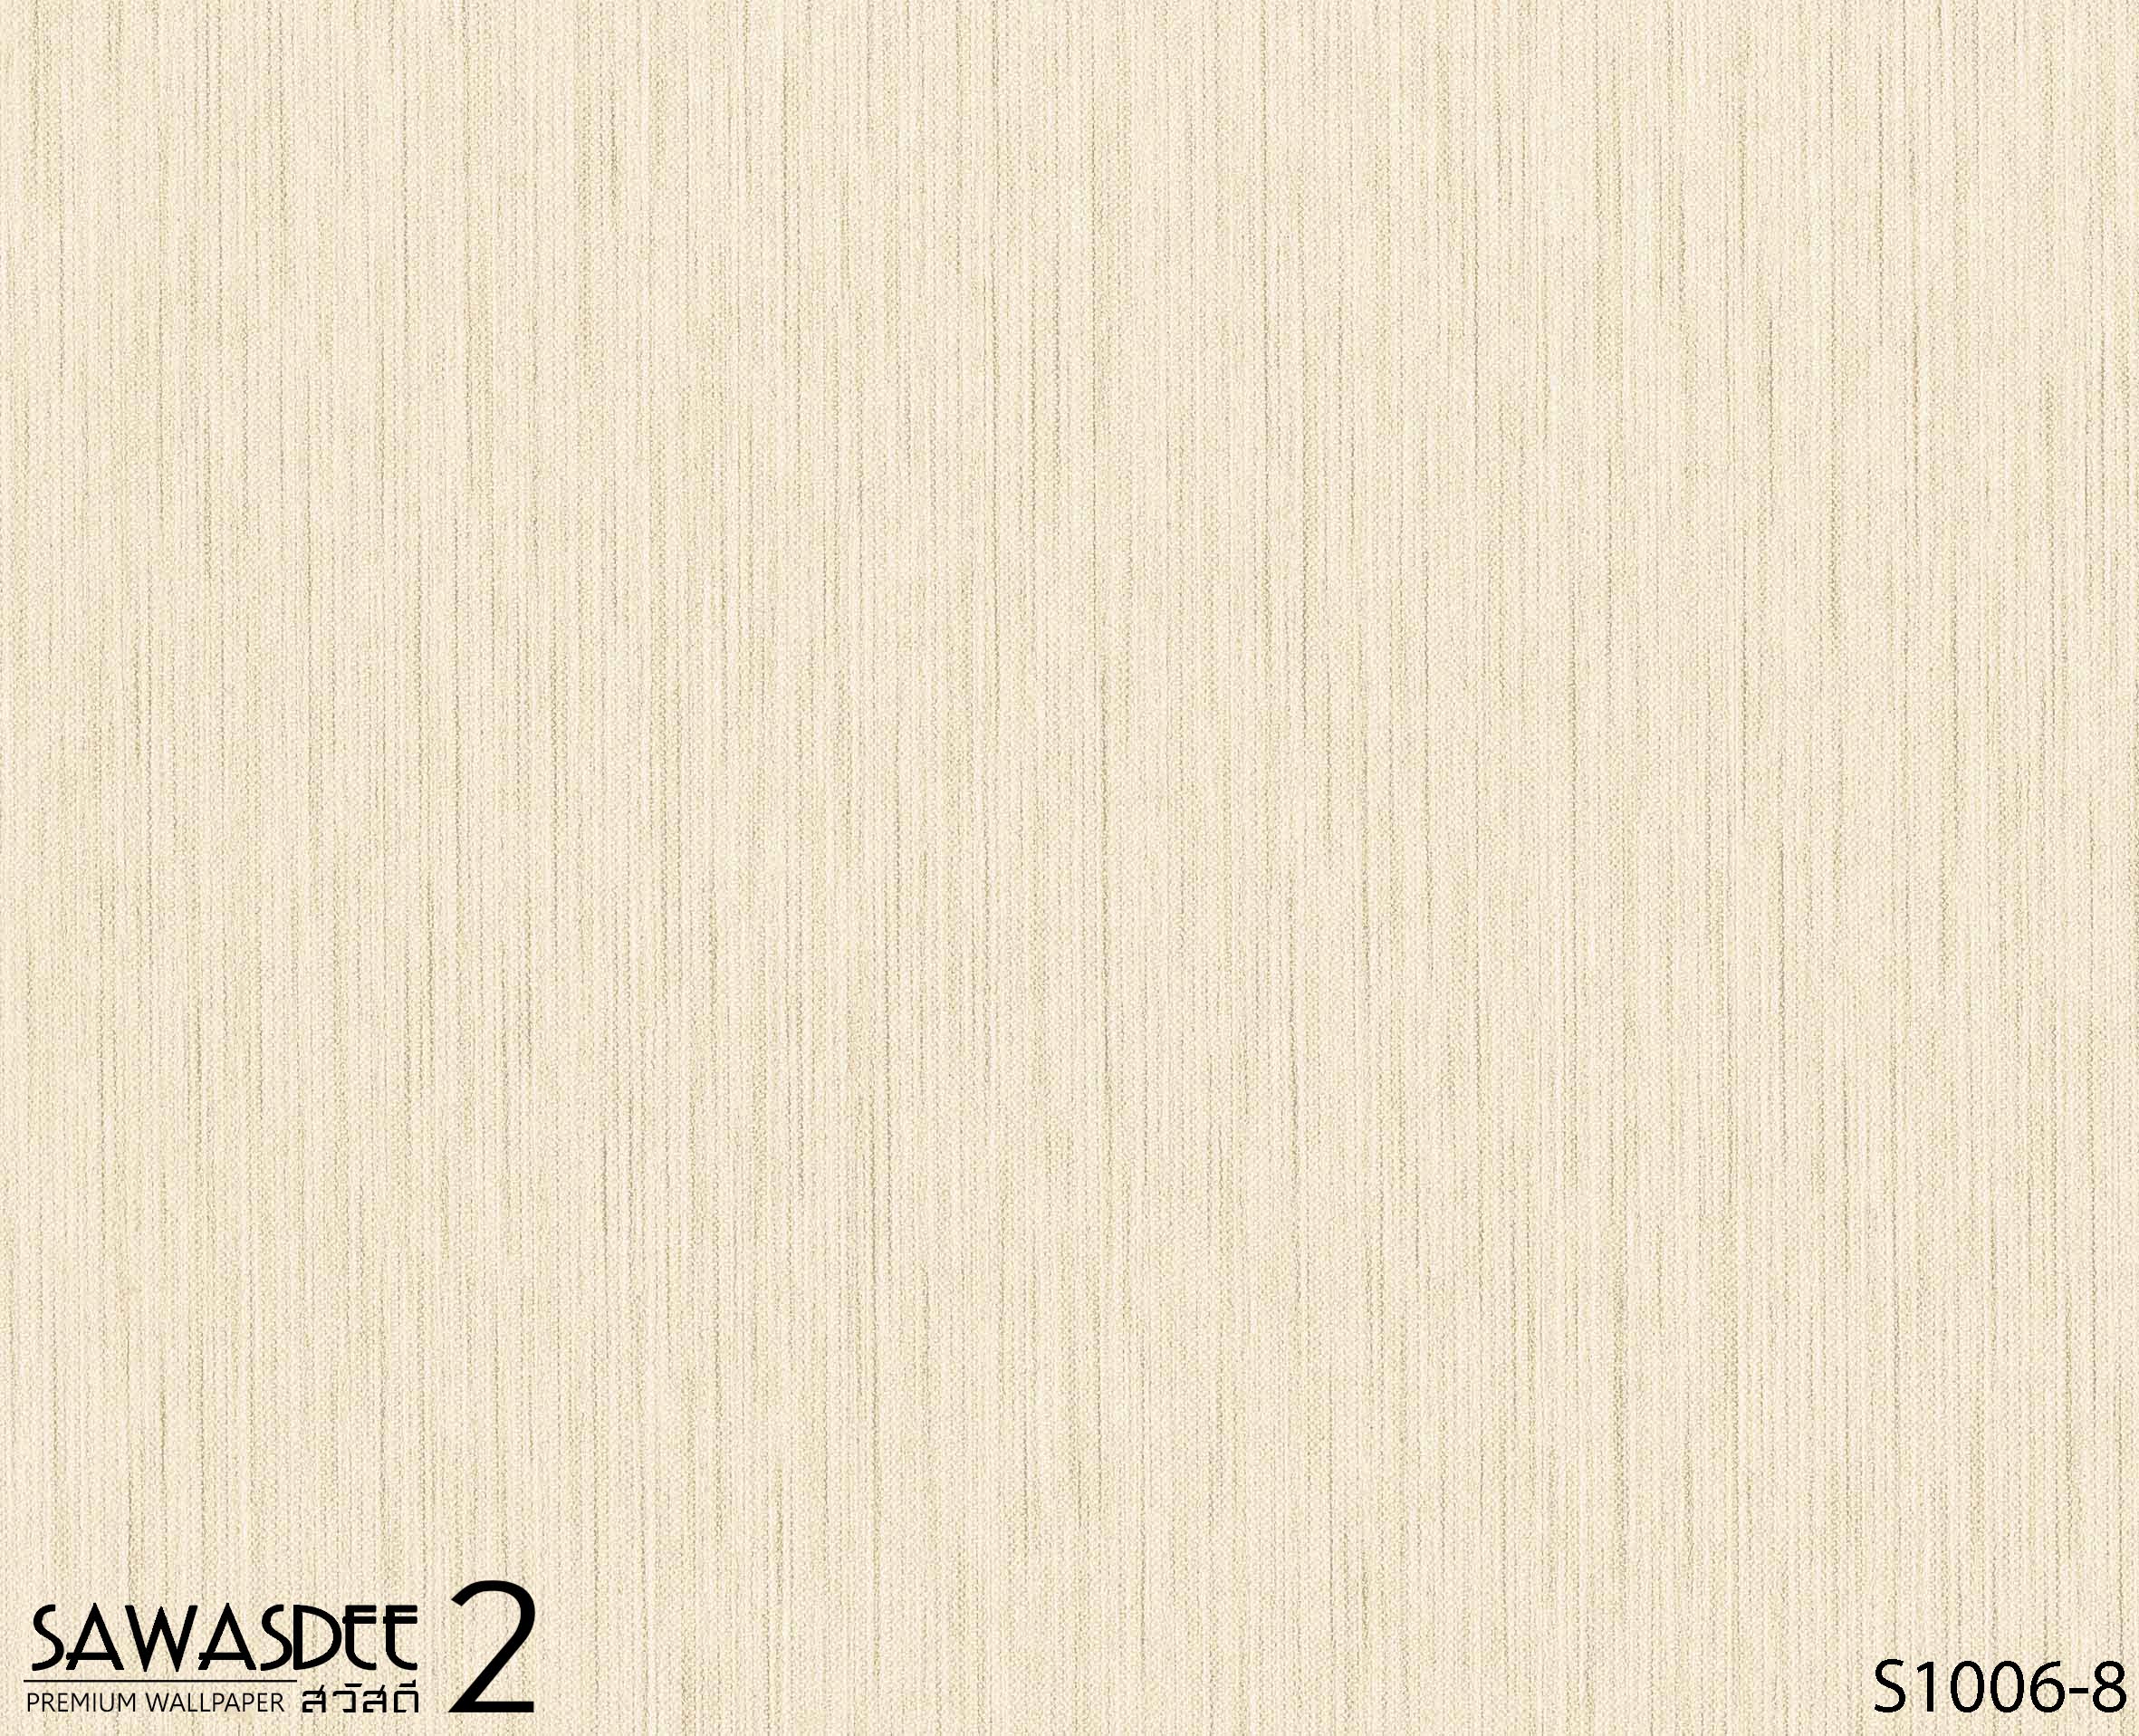 Wallpaper (SAWASDEE 2) S1006-8